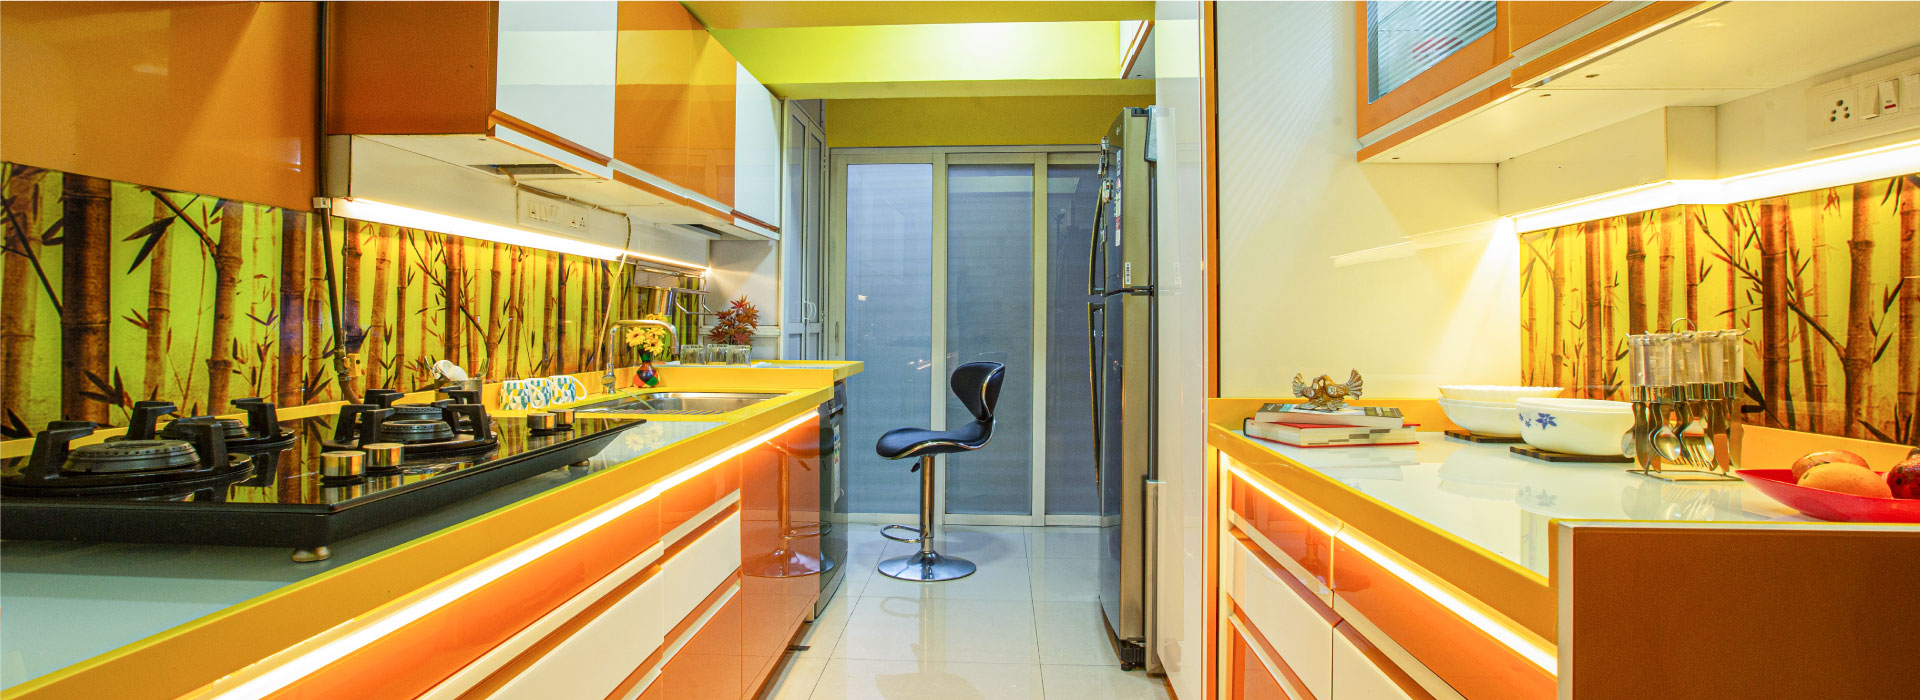 Modular Kitchen Glass Top | Promkraft Interior